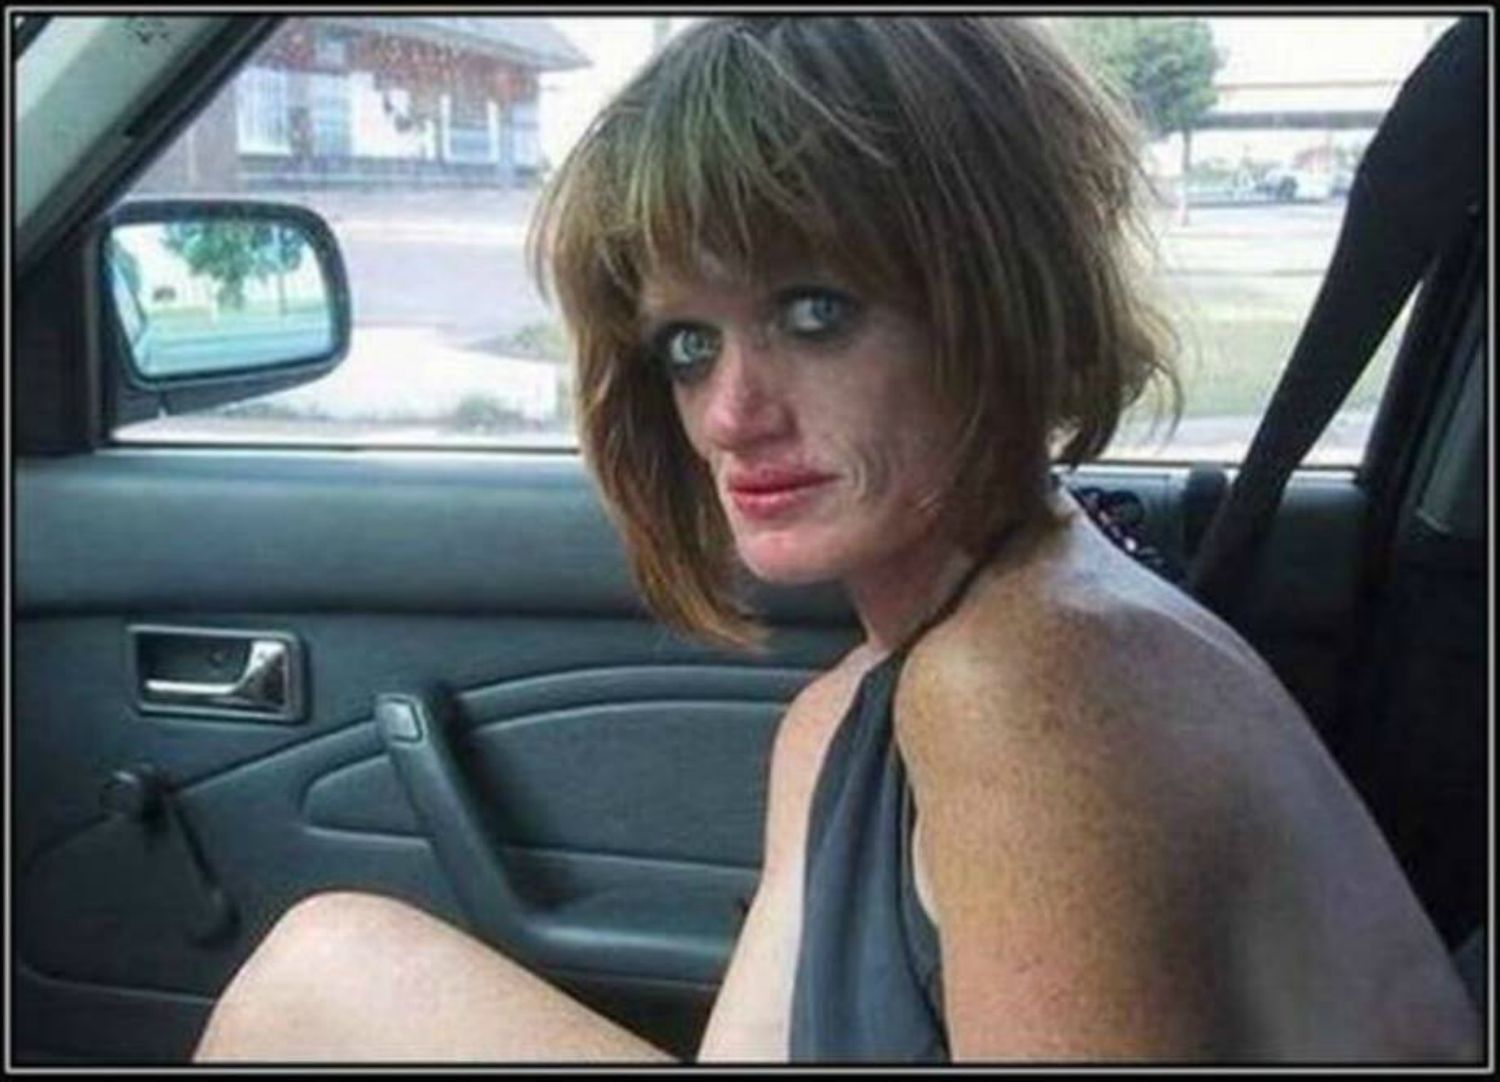 Ugly meth heroin addict Prostitute hoe in car Blank Meme Template